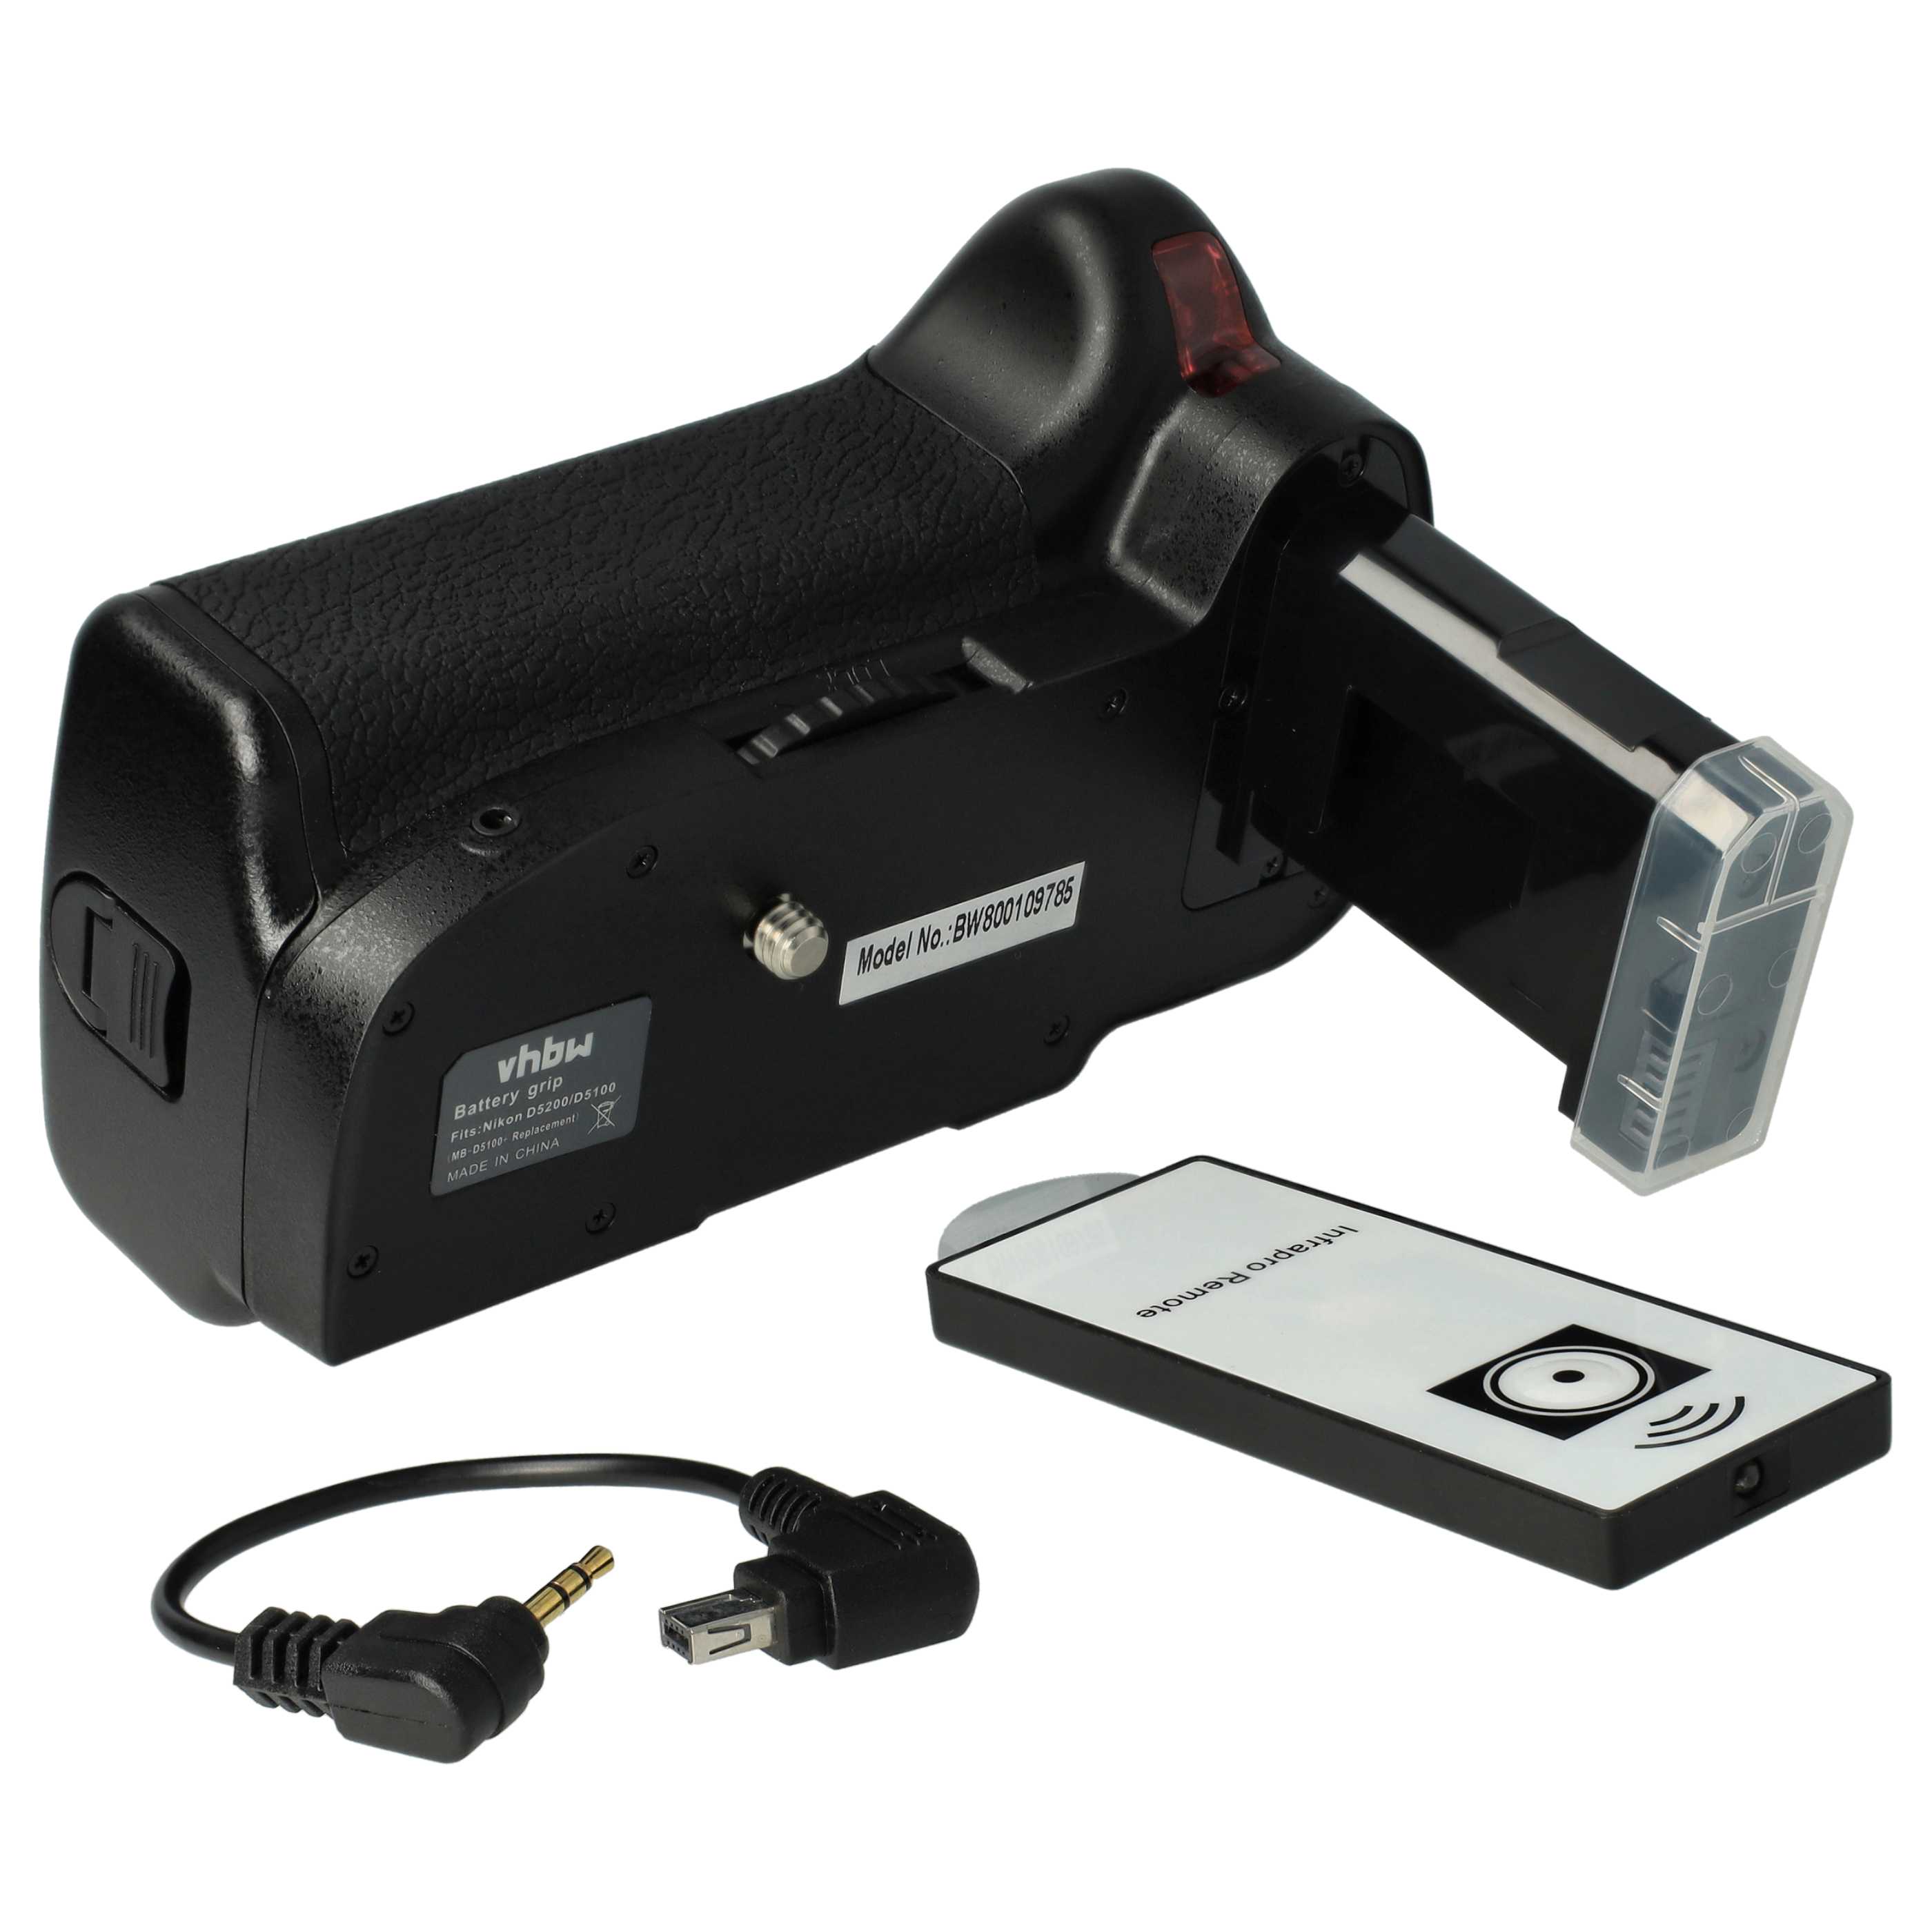 Impugnatura battery grip per camera Nikon D5100, D5200, D5300 - incl. ghiera, incl. pulsante scatto 